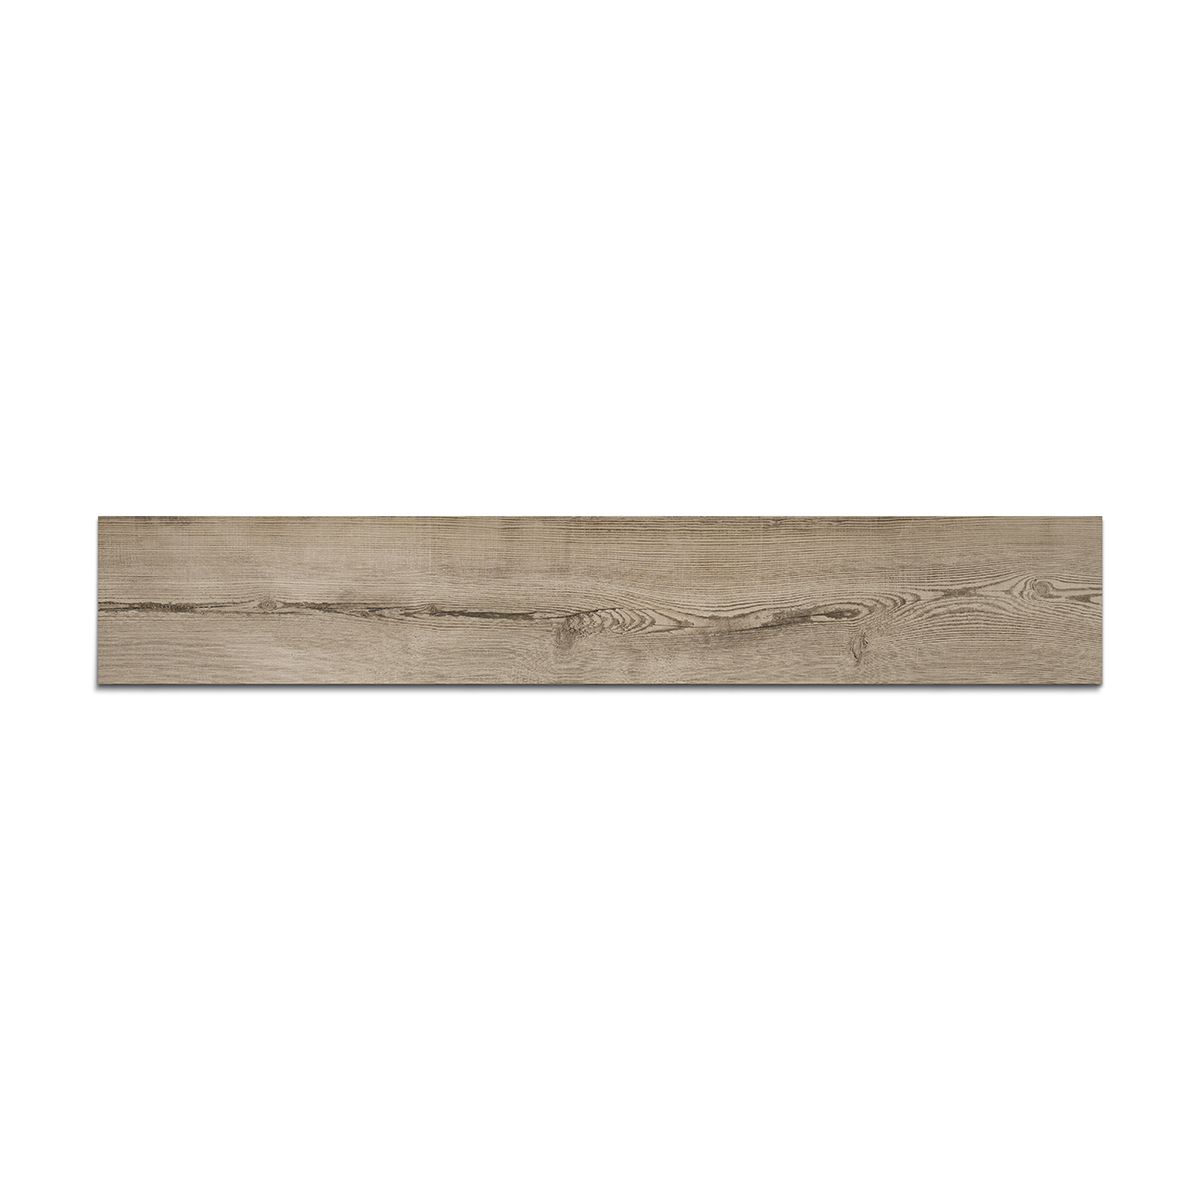 Chaletwood Plank Natural 10x60 Porcelain Tile 01